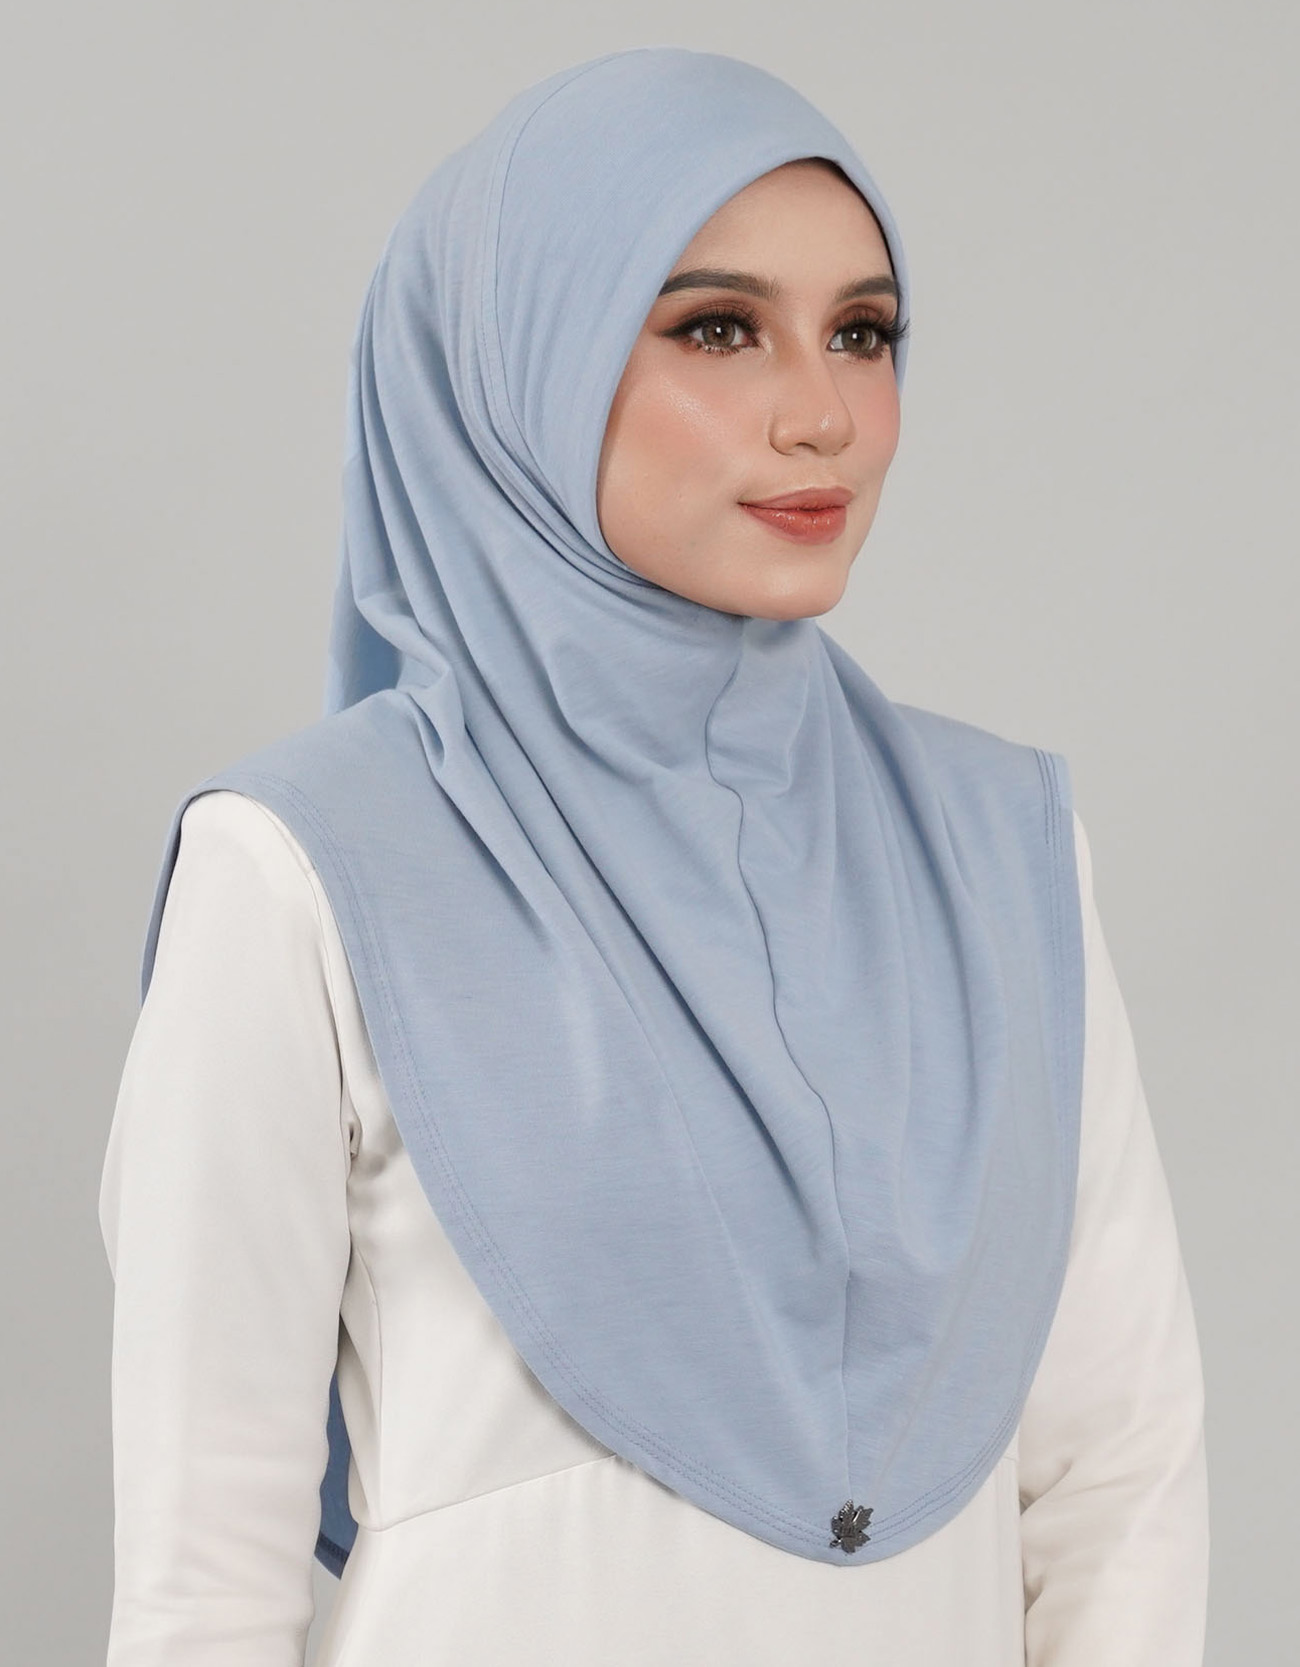 Express Hijab Damia Plain - 05 Baby Blue